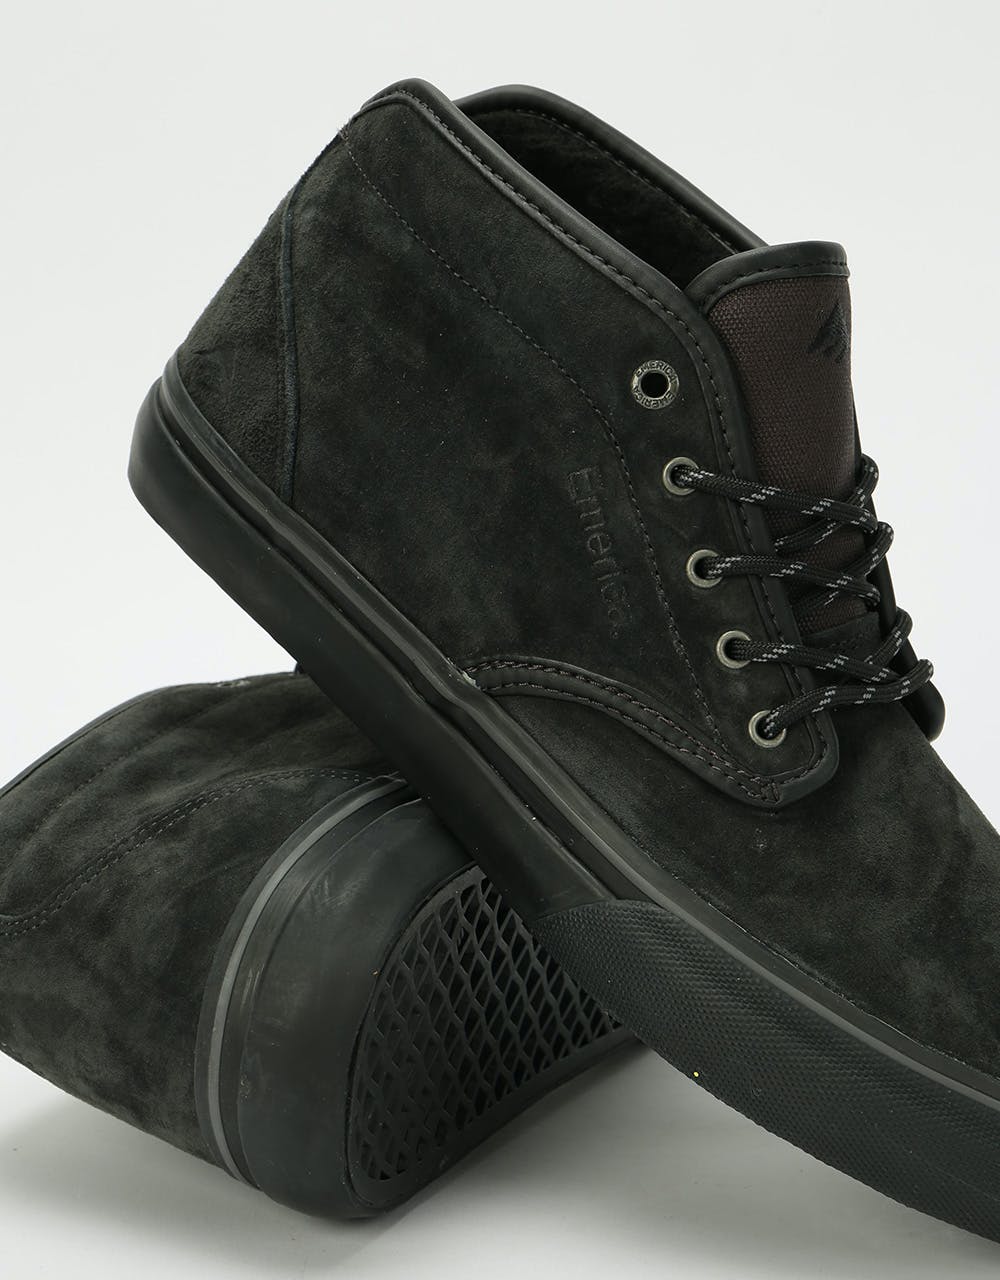 Emerica Wino G6 Mid Skate Shoes - Dark Grey/Black